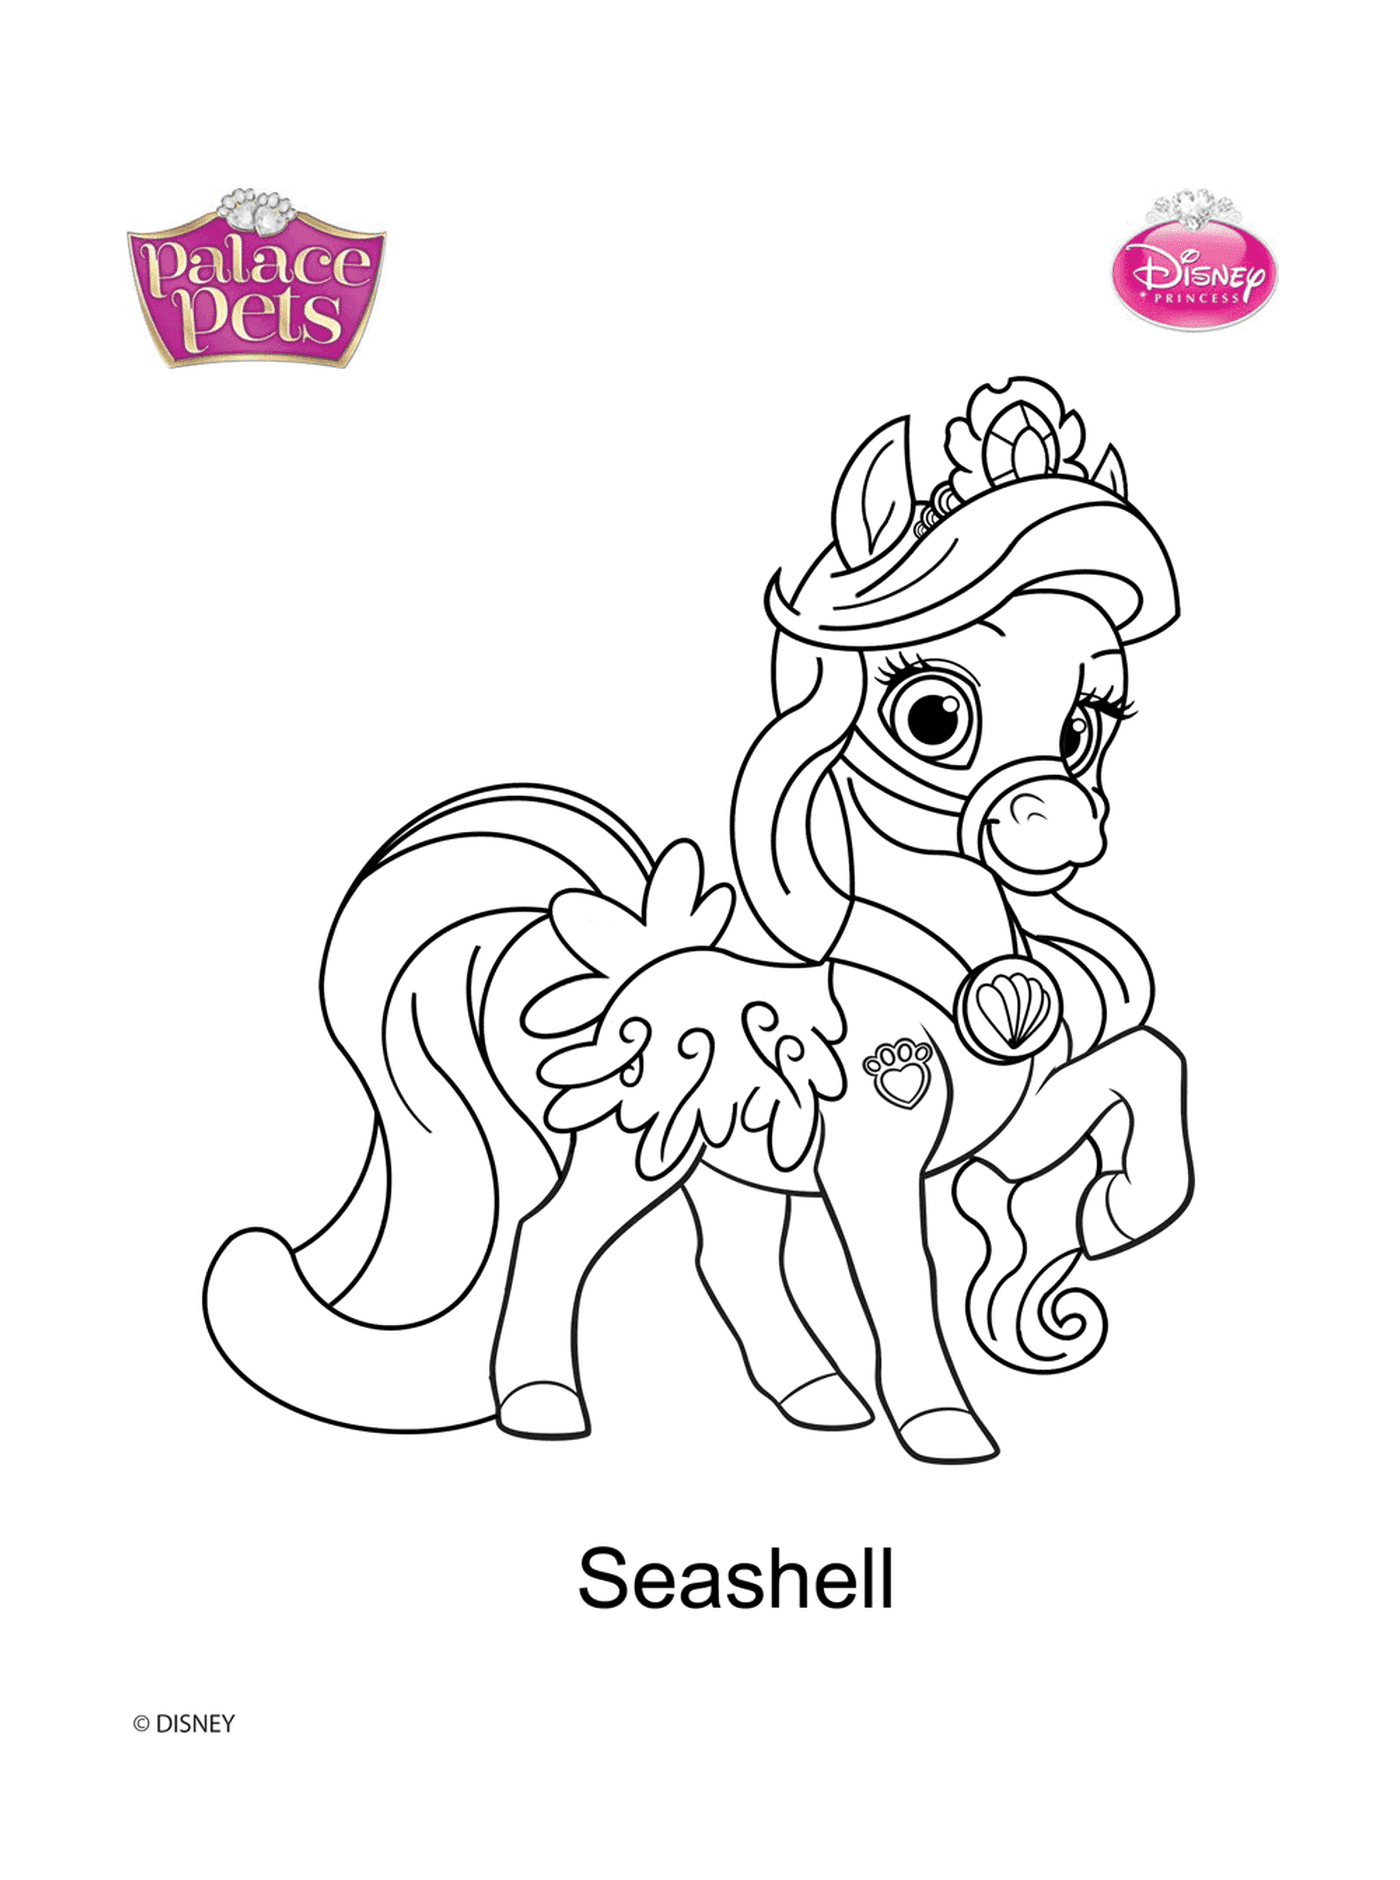  Palace scoregge, Seashell Principessa Pony 